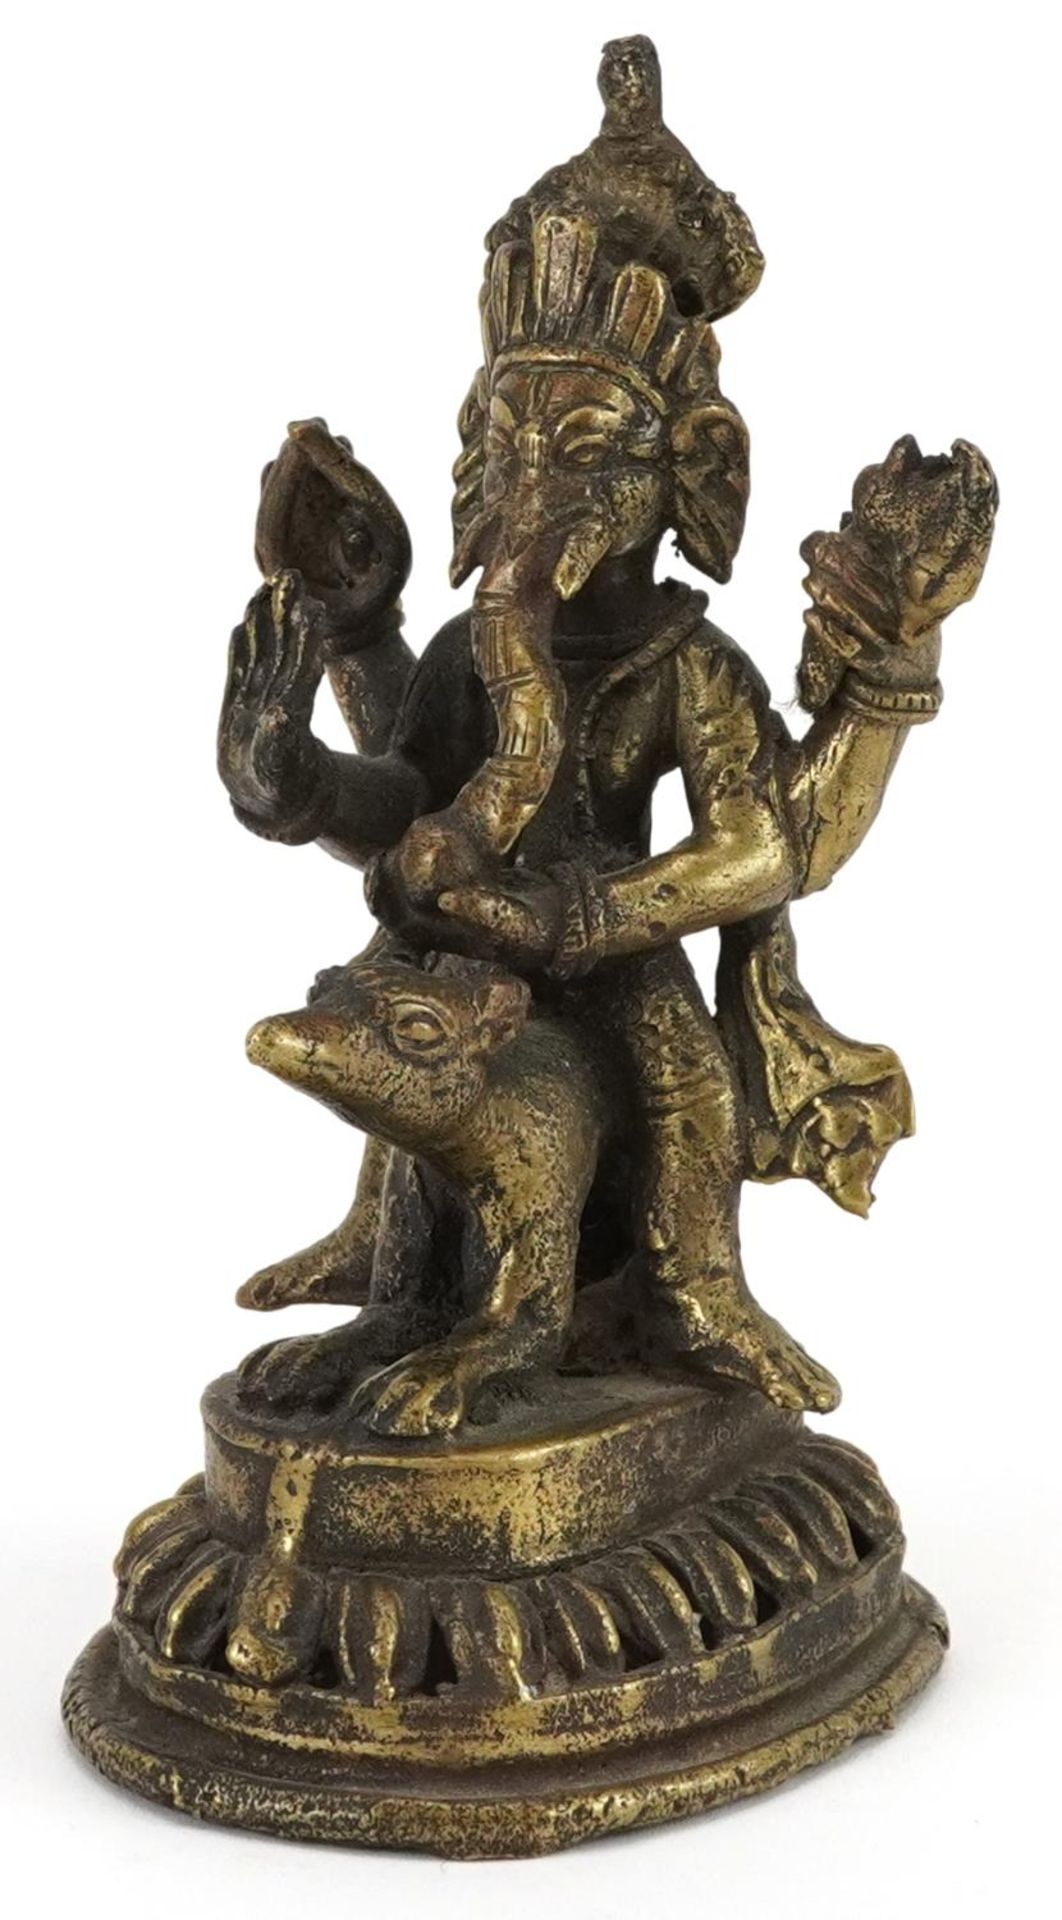 19th century Indian bronze statuette of Ganesh, 12.5cm high